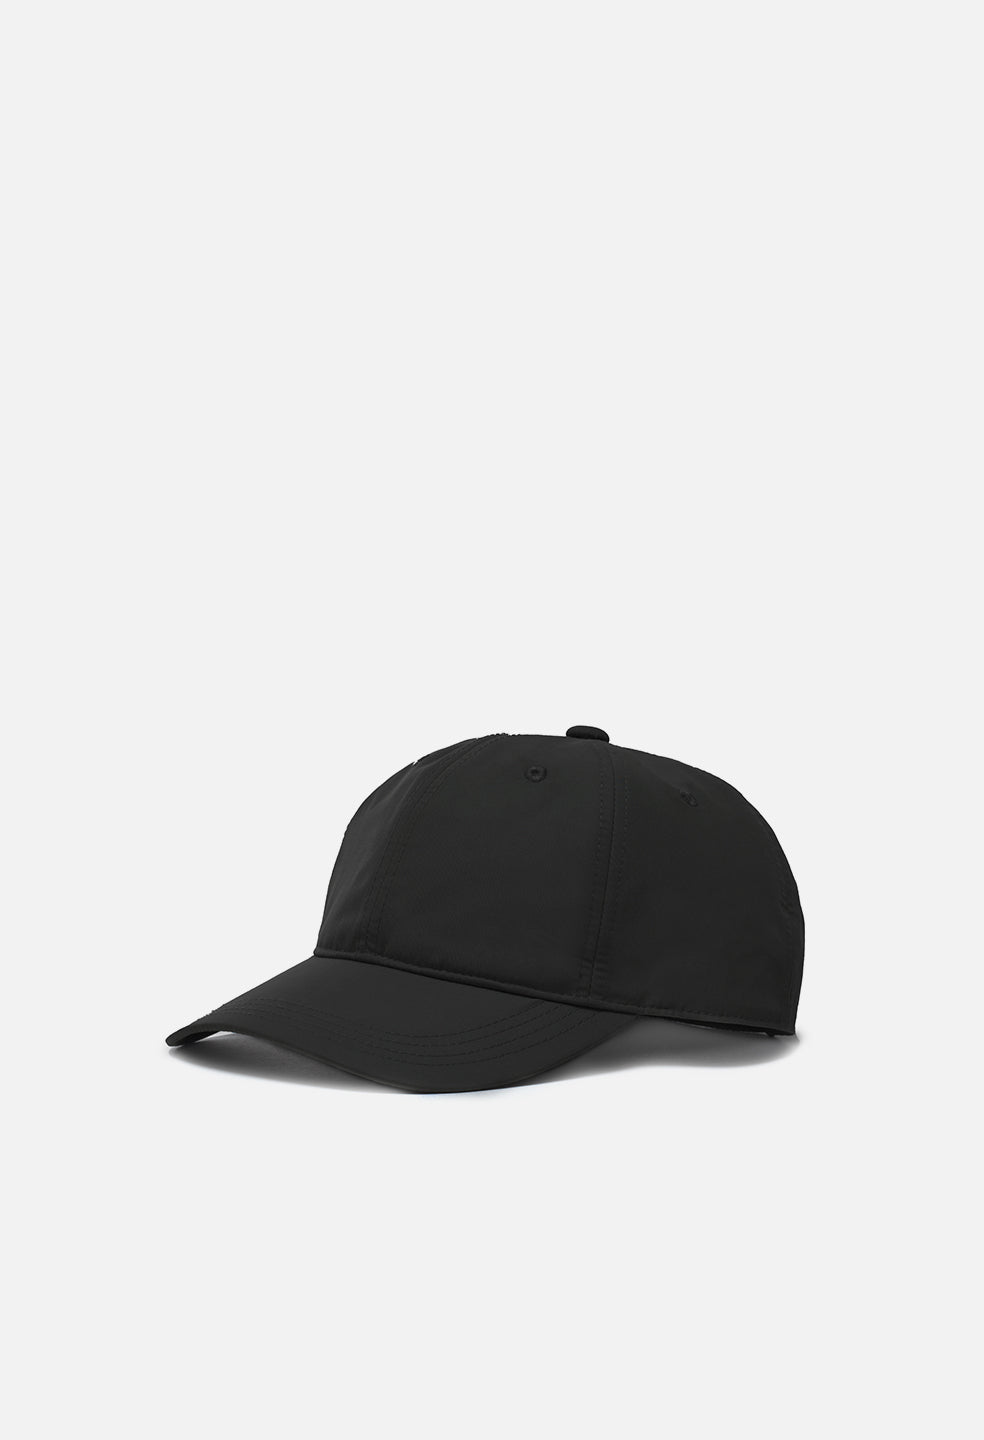 Himalayan Hat / Black